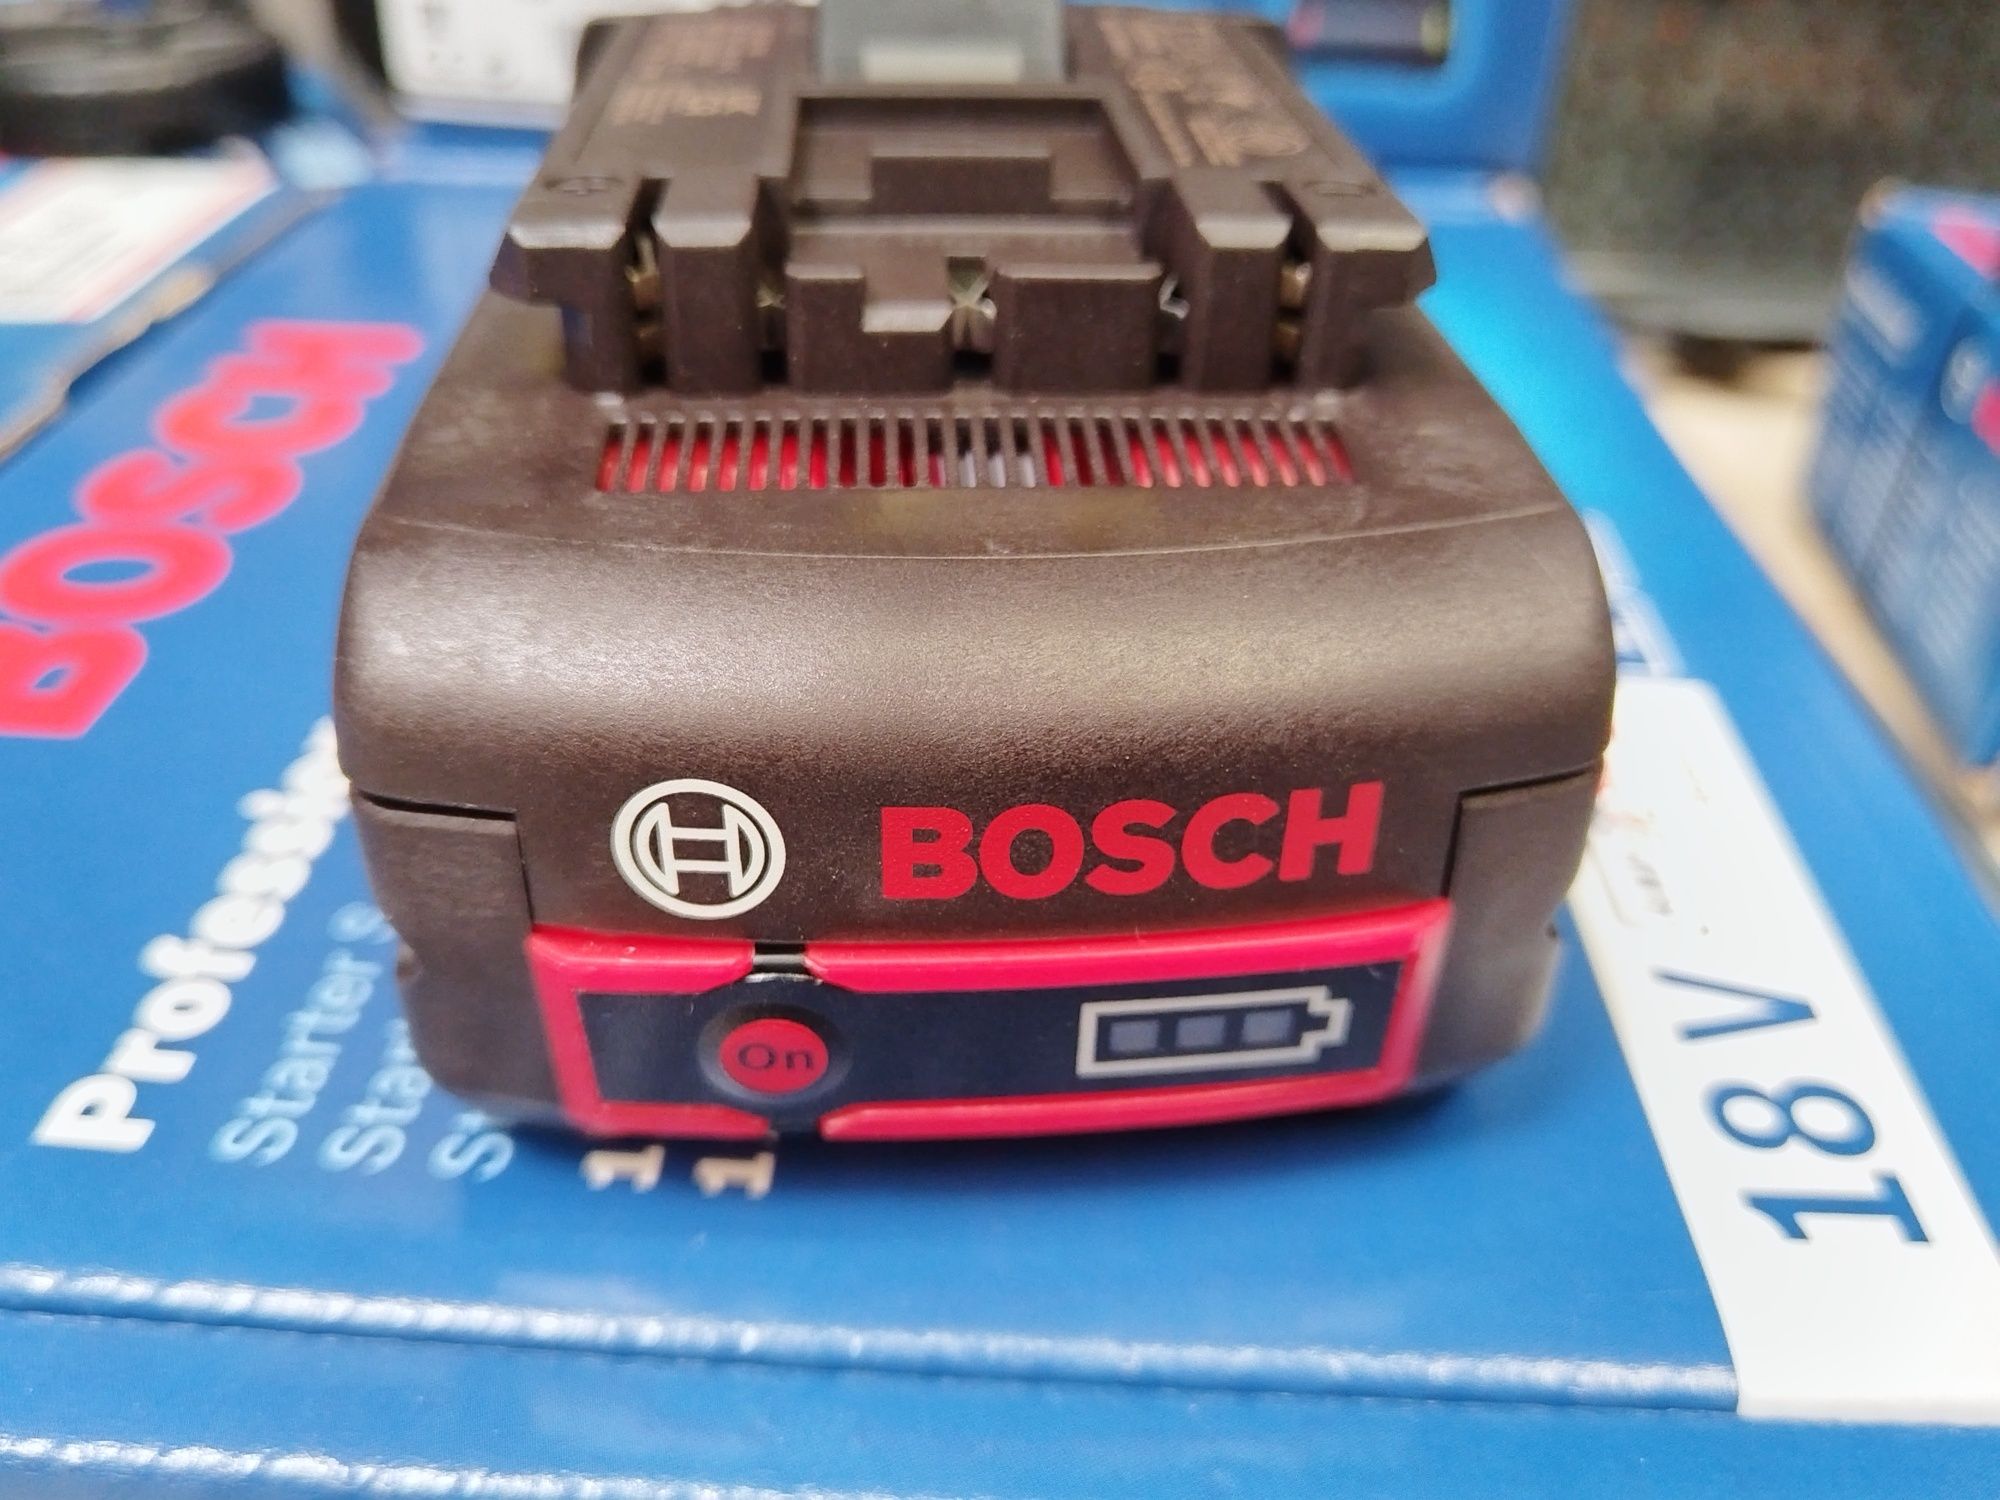 Acumulator Bosch GBA 18v 4.0Ah NOU